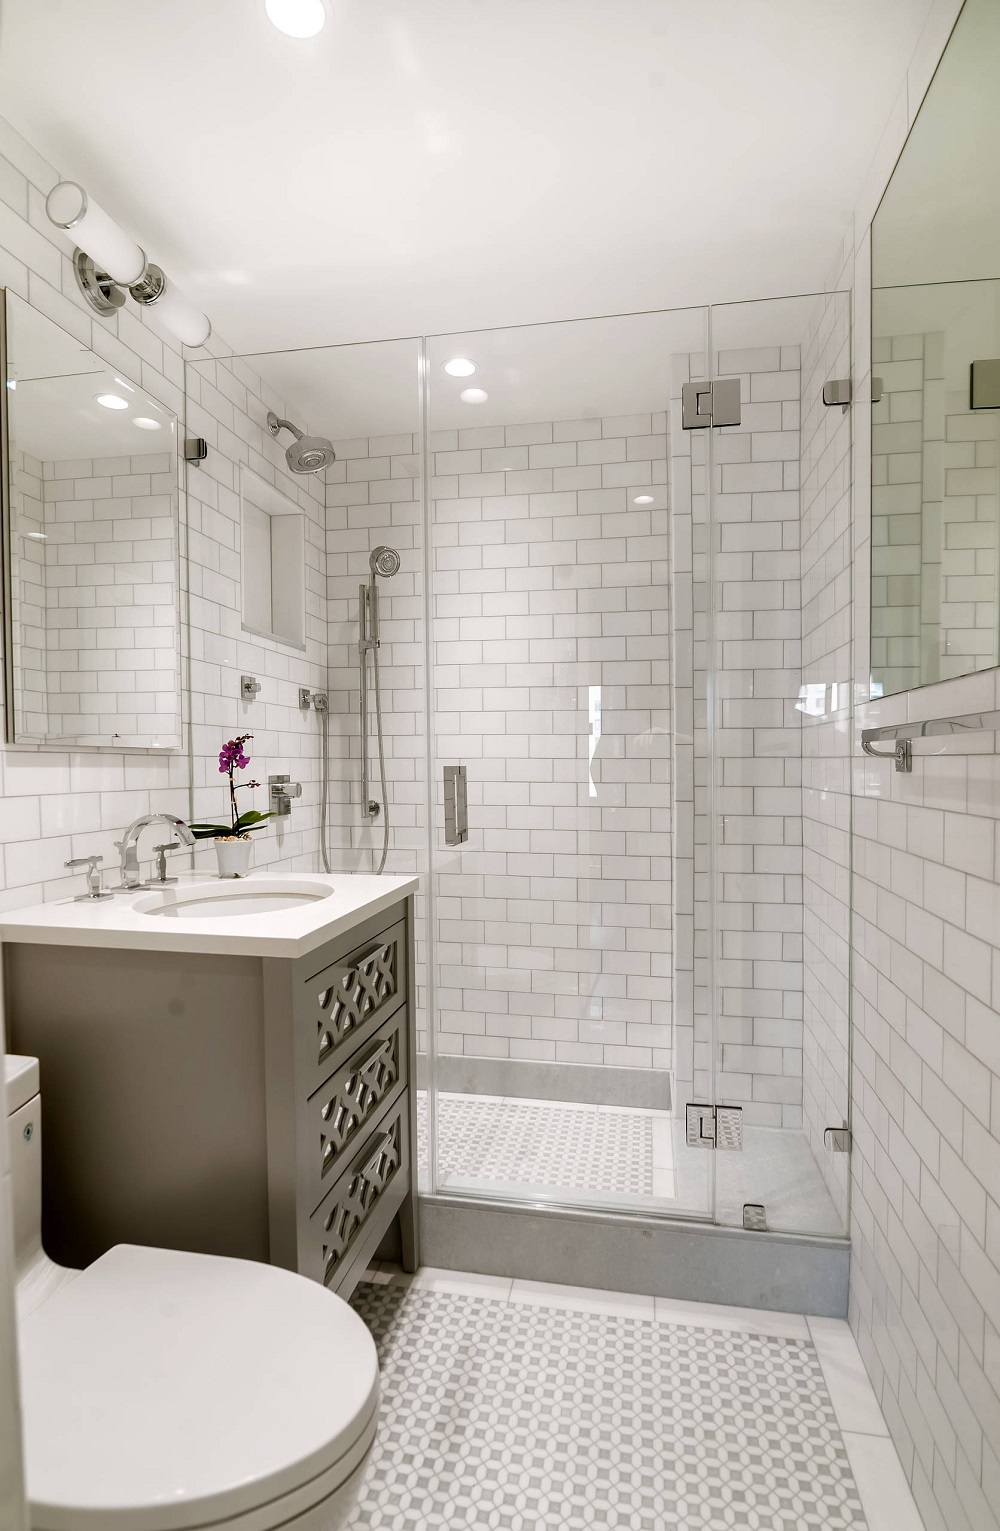 van6-2 Neat corner bathroom vanity ideas that you will find useful